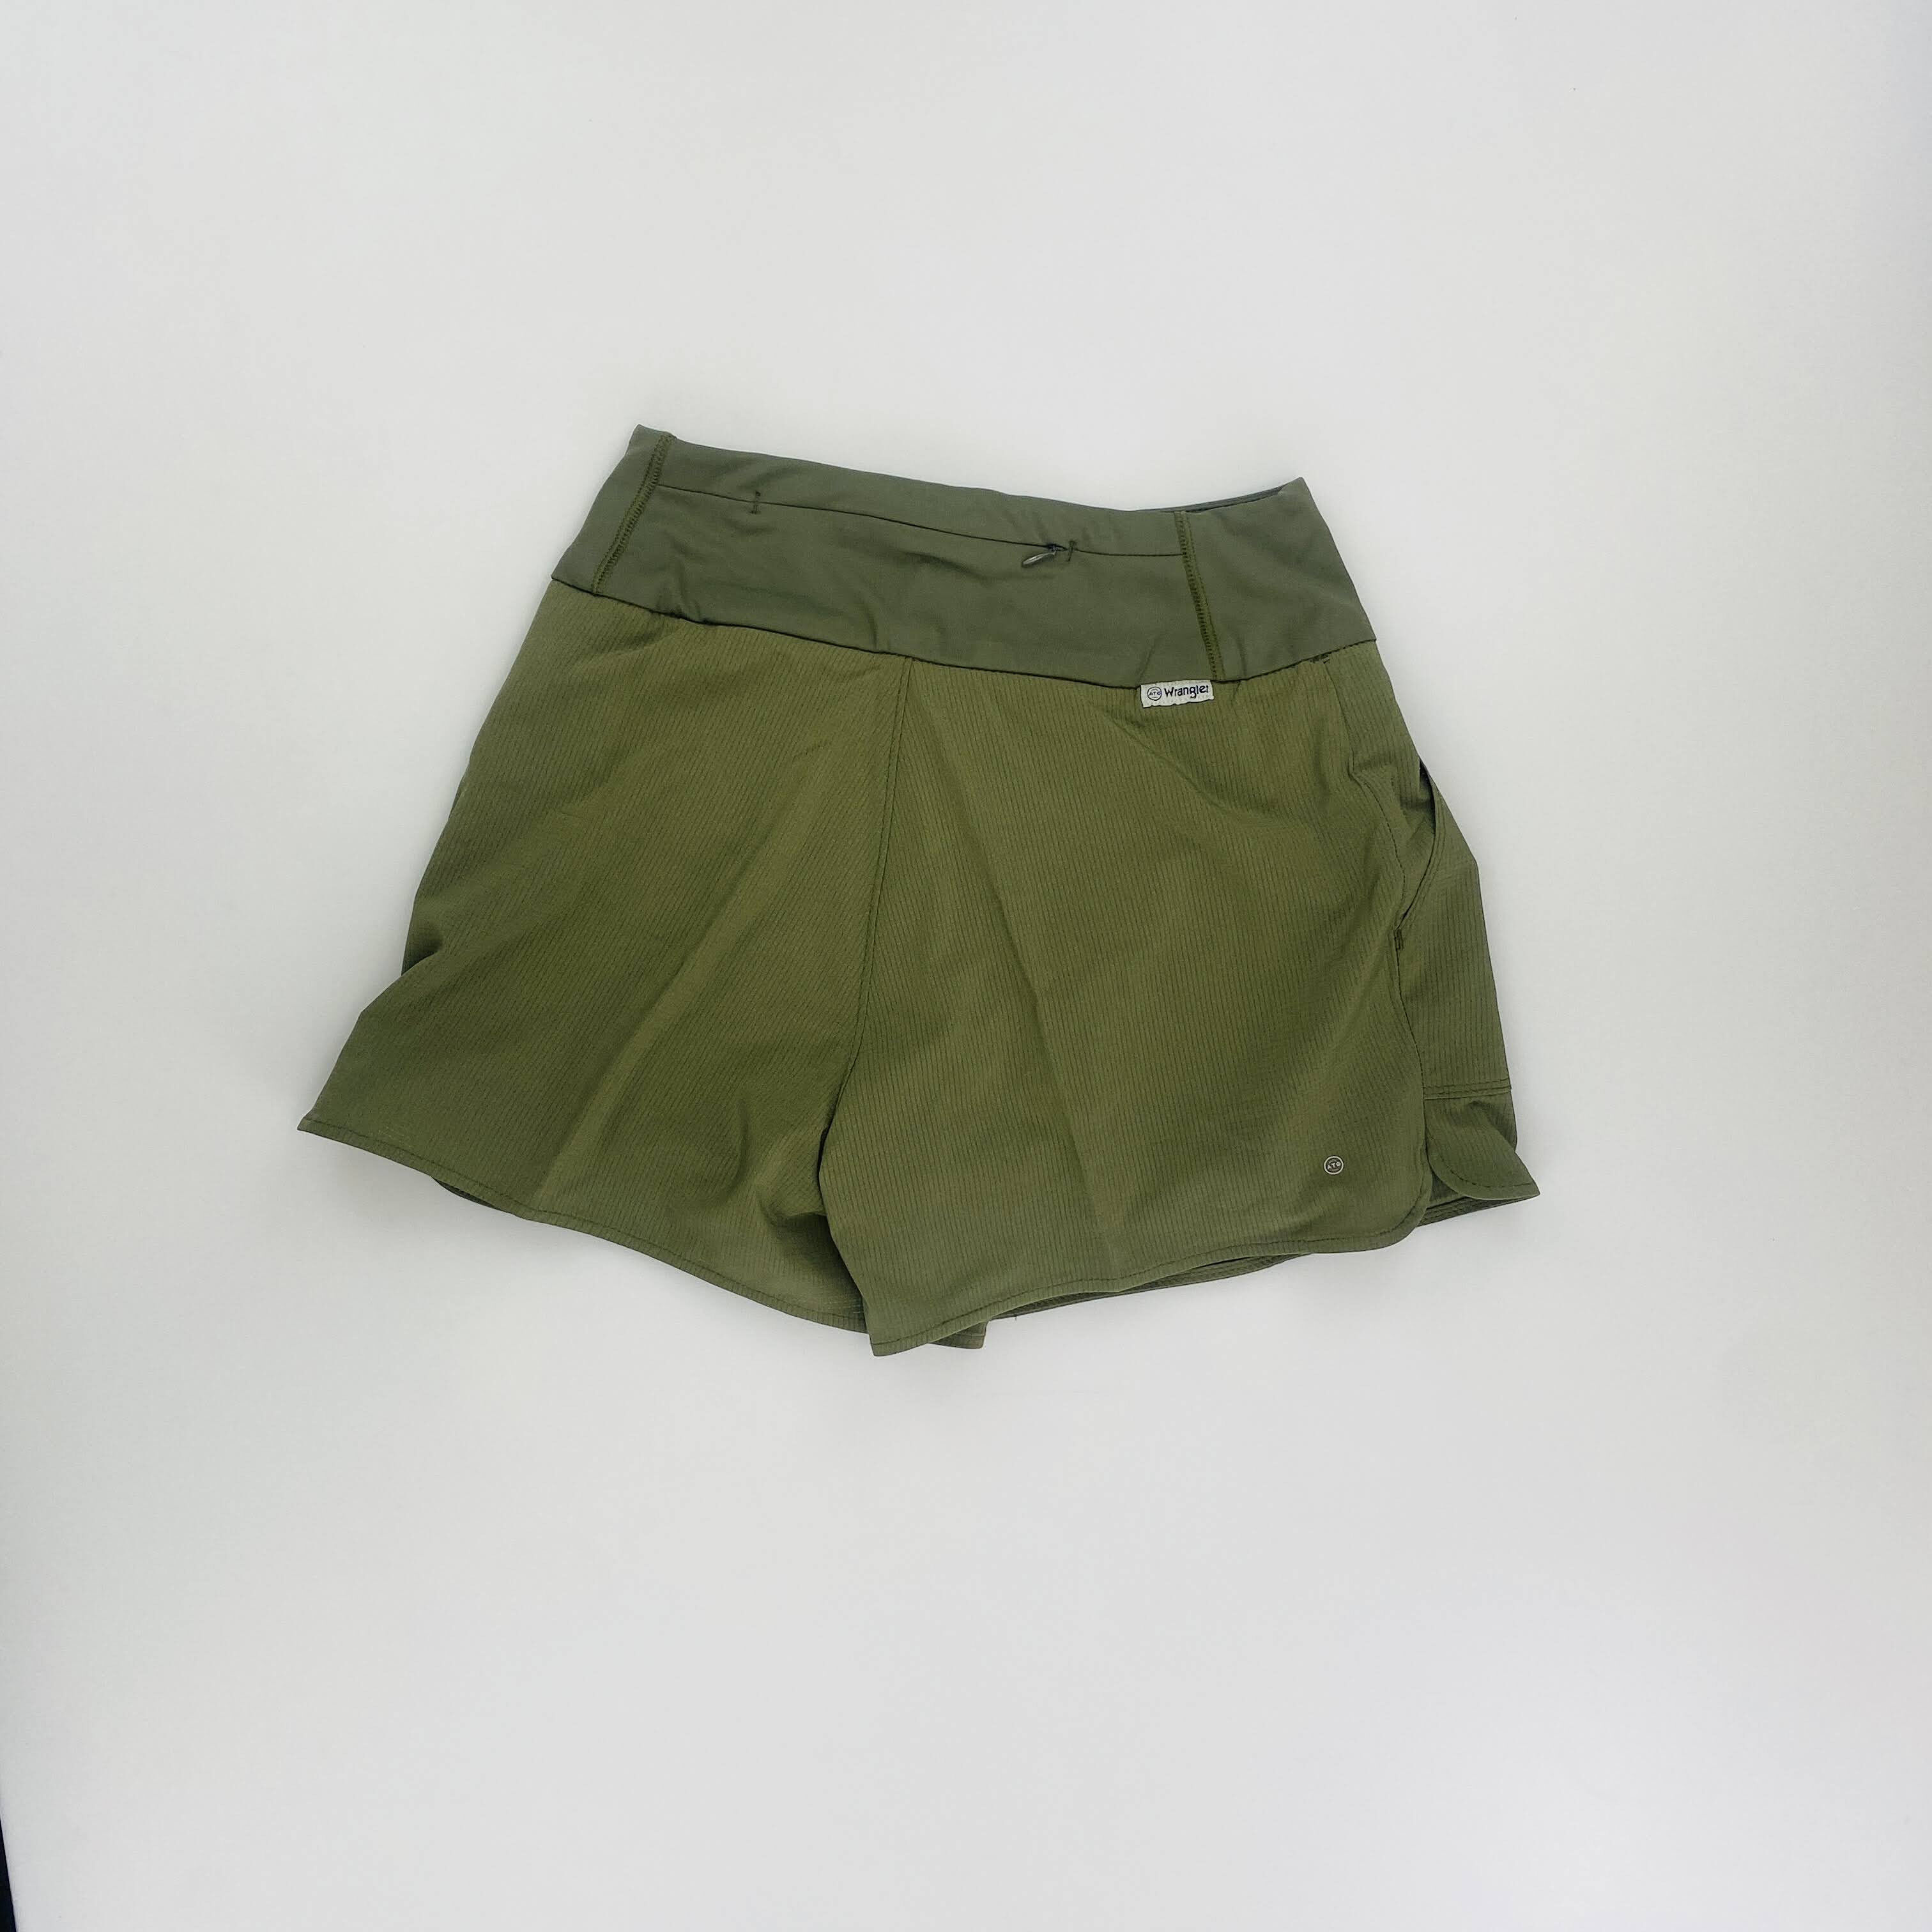 Wrangler Mixed Material Short - Second Hand Shorts - Women's - Vert Olive - S | Hardloop